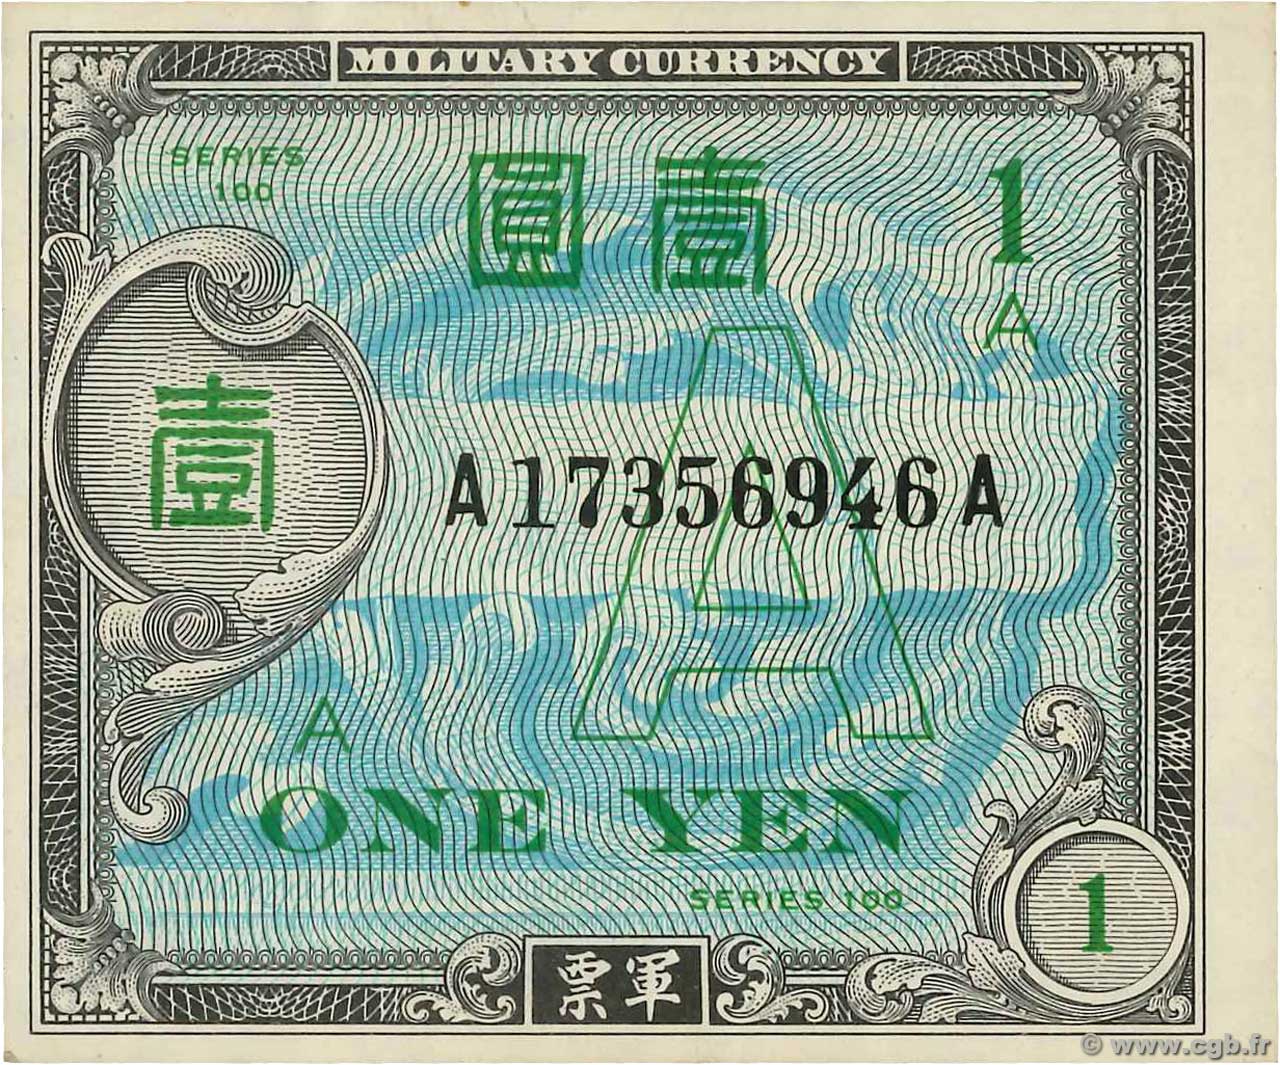 1 Yen JAPON  1945 P.066 pr.NEUF